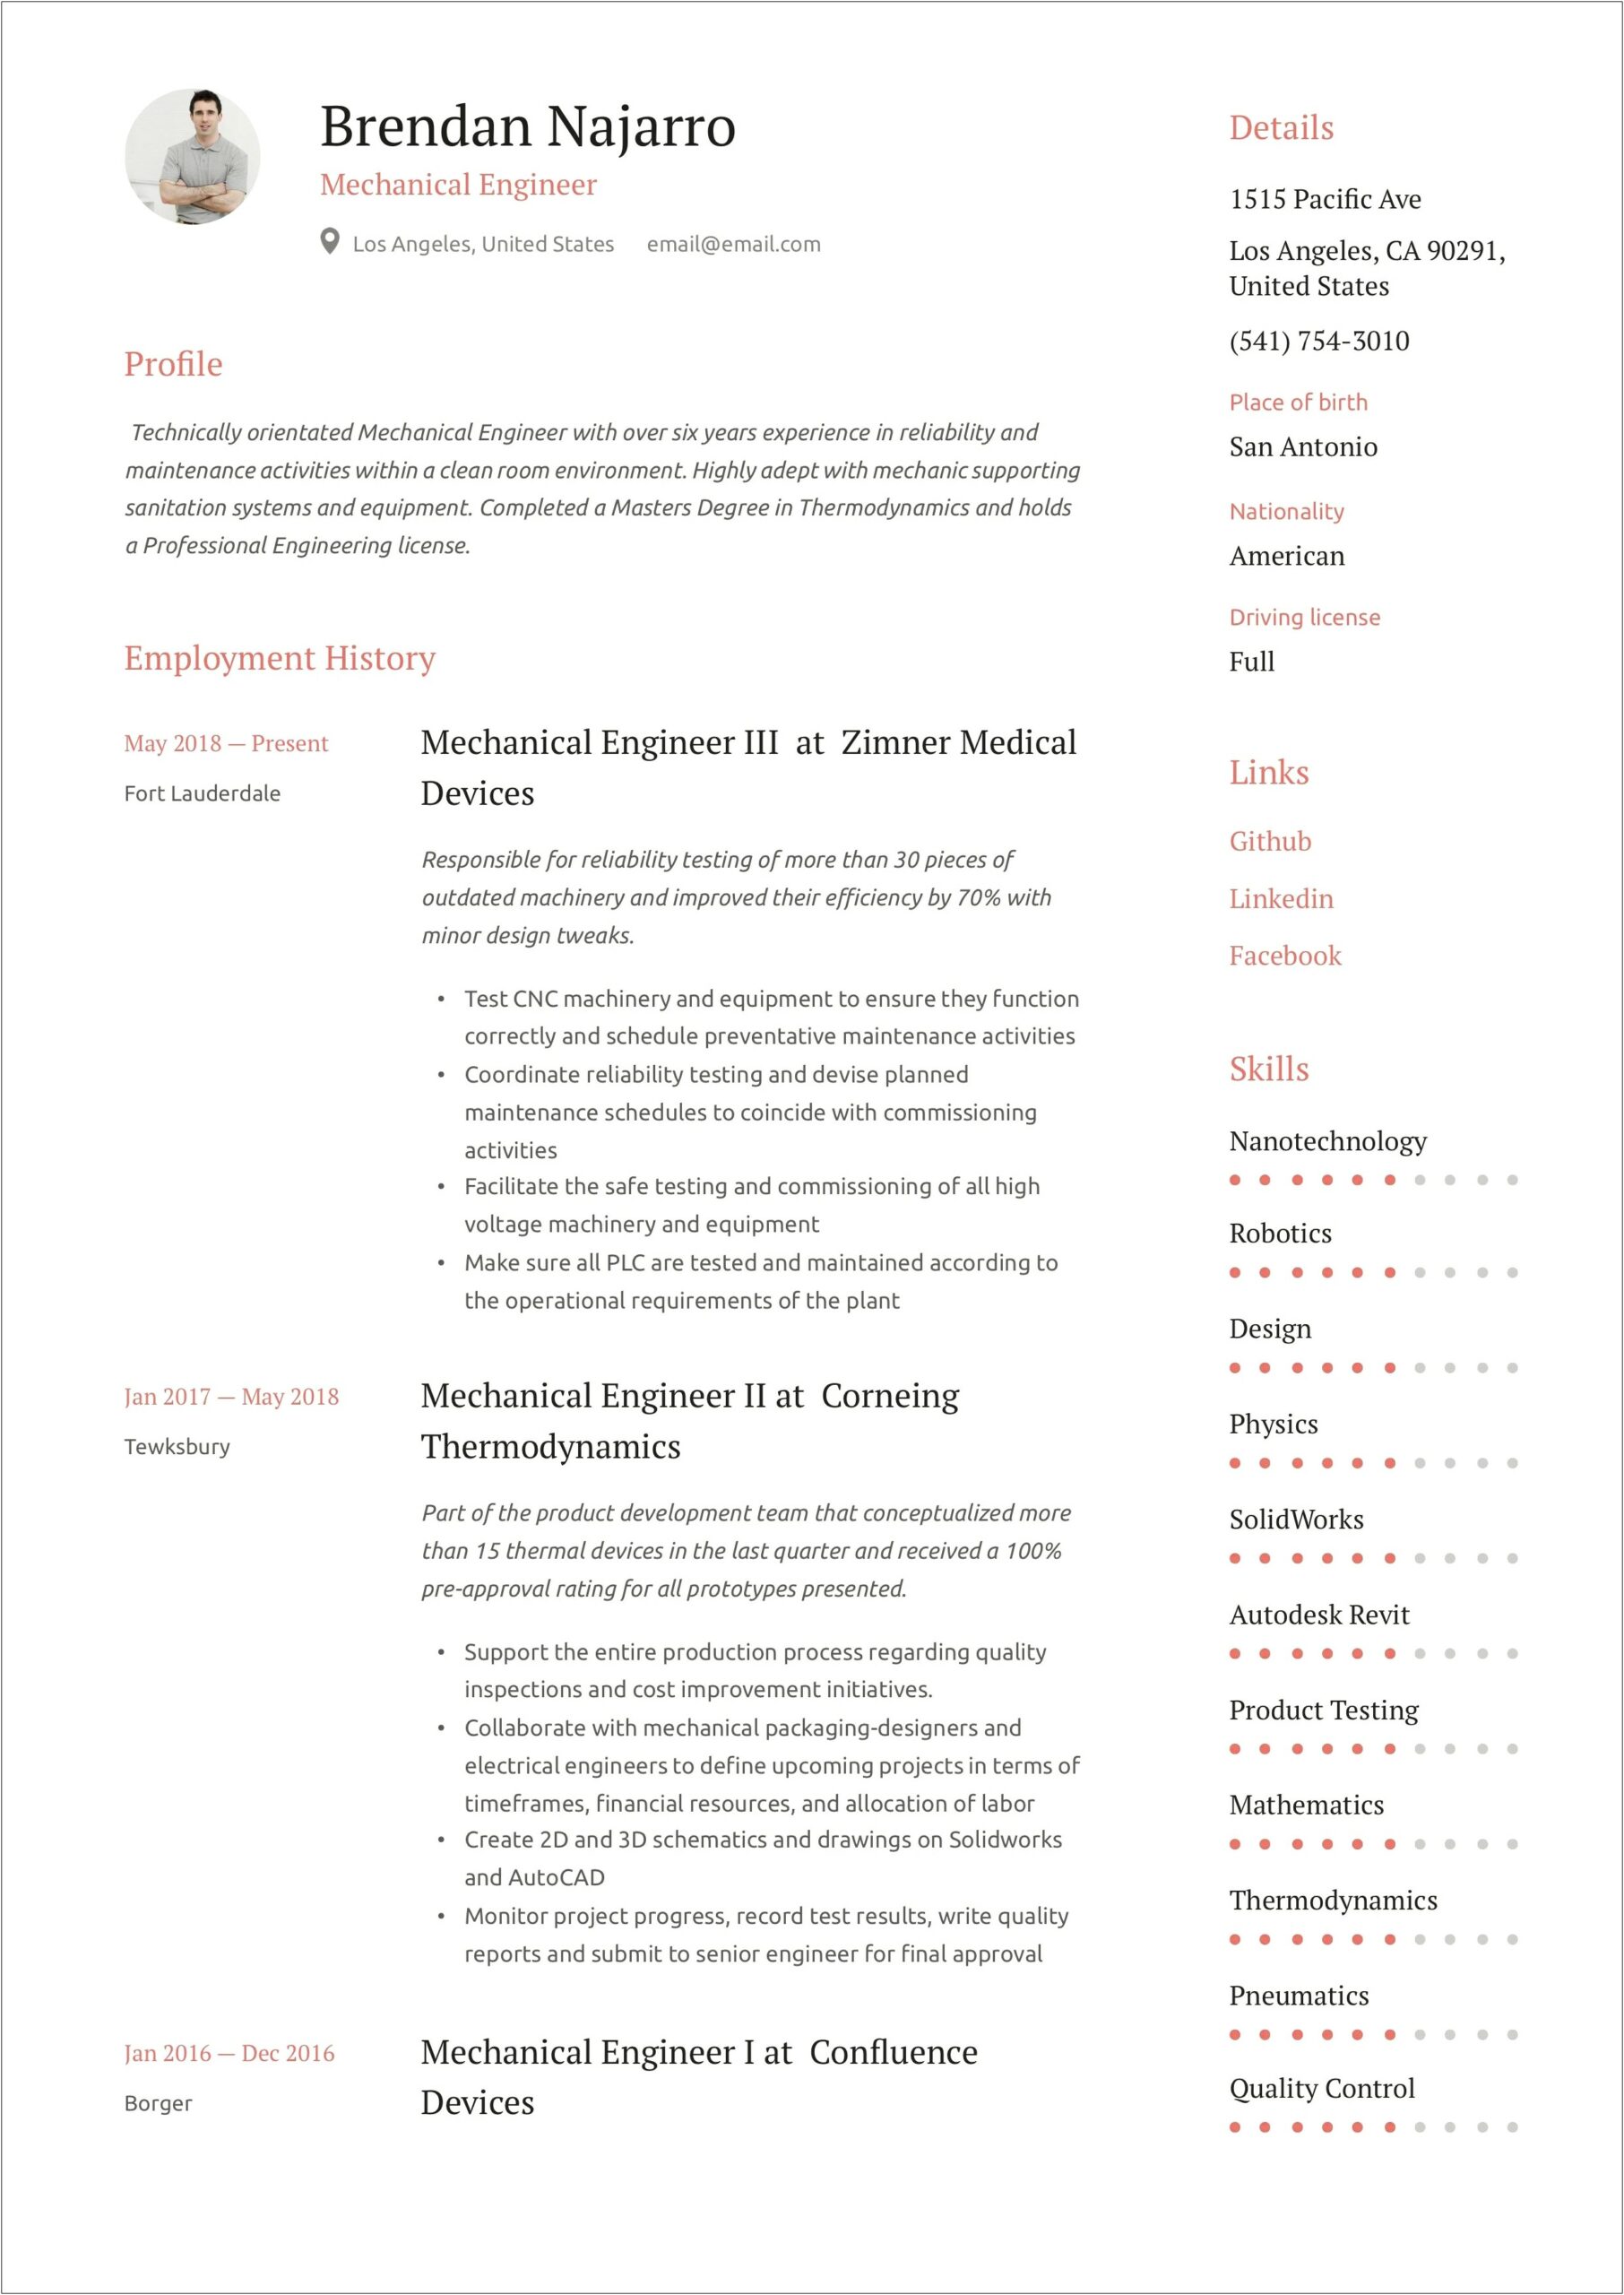 Sample Resume For Mechanical Design Engineer Pdf